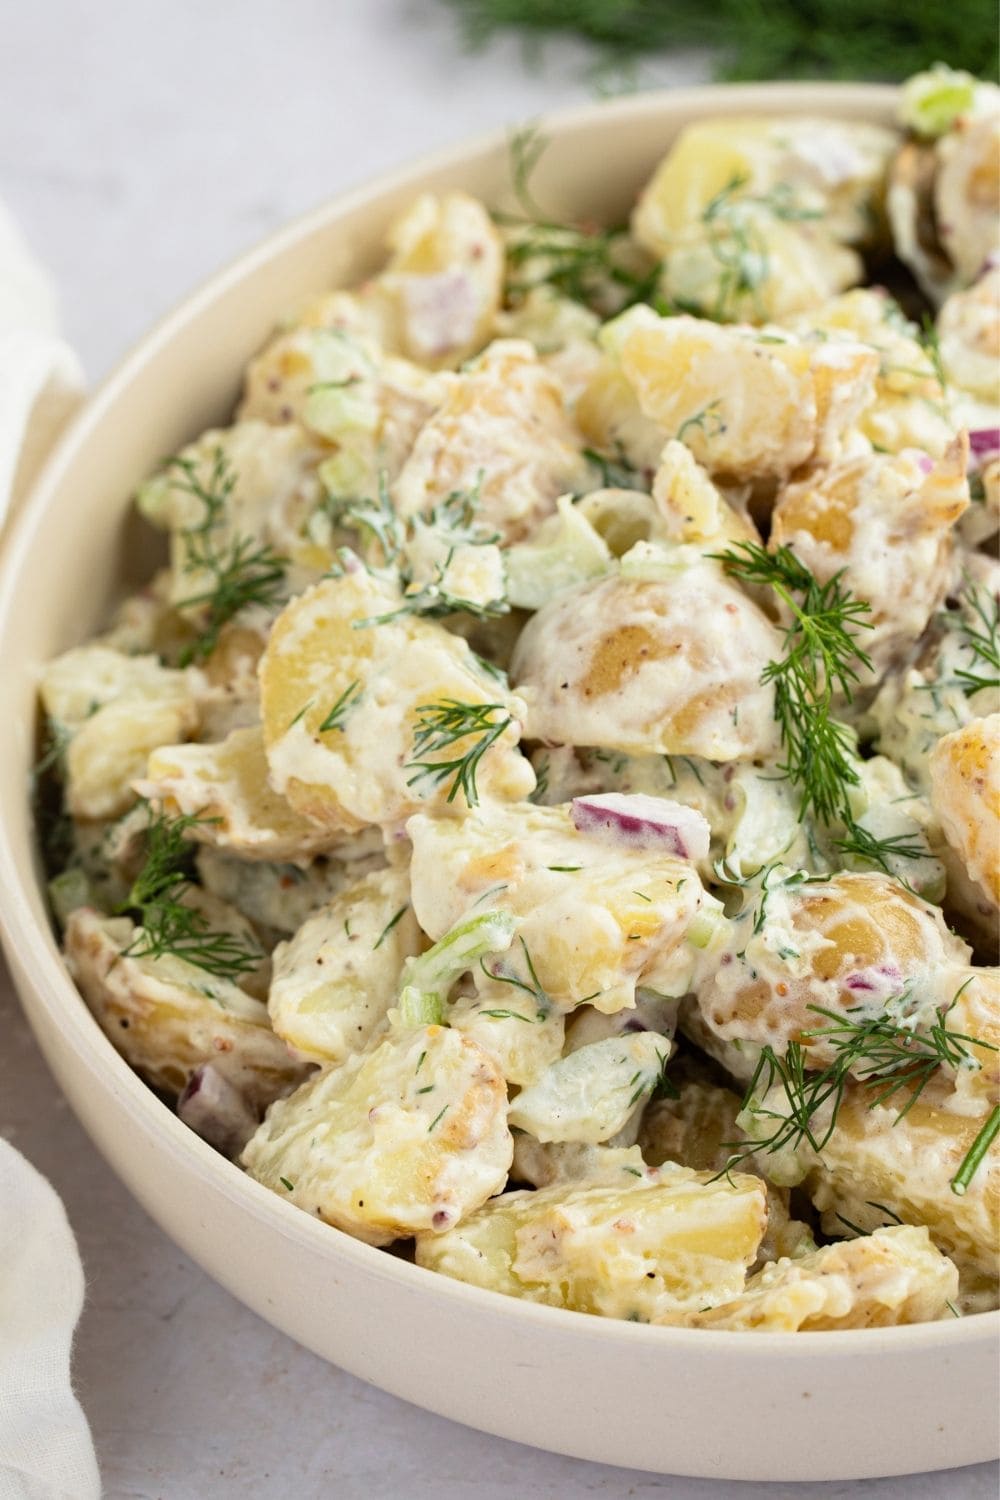 Homemade Ina Garten's Potato Salad with Dill